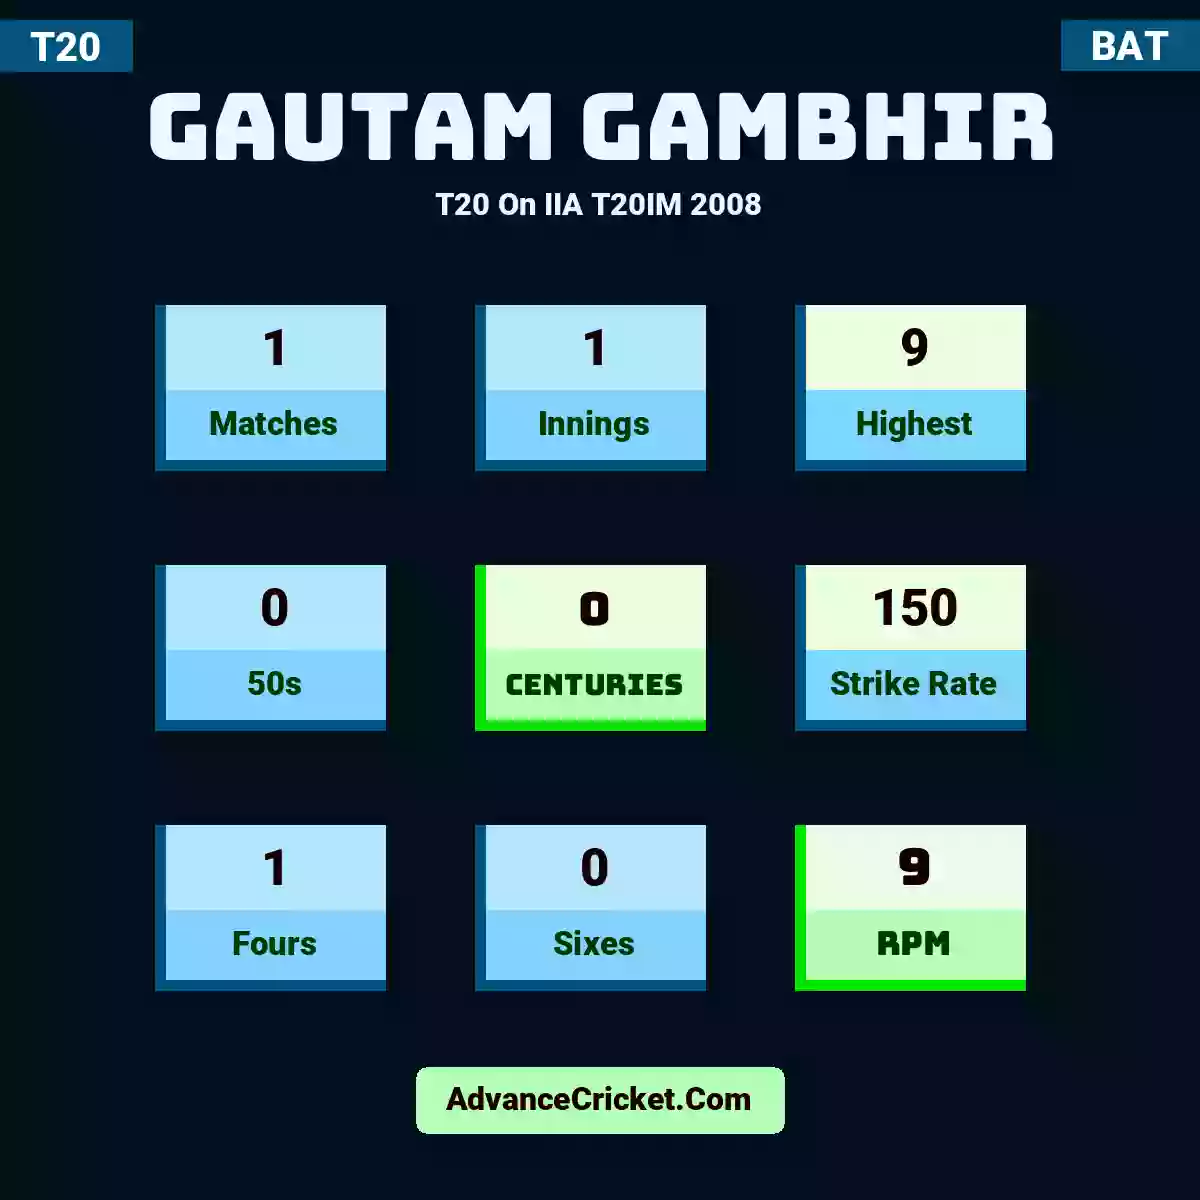 Gautam Gambhir T20  On IIA T20IM 2008, Gautam Gambhir played 1 matches, scored 9 runs as highest, 0 half-centuries, and 0 centuries, with a strike rate of 150. G.Gambhir hit 1 fours and 0 sixes, with an RPM of 9.